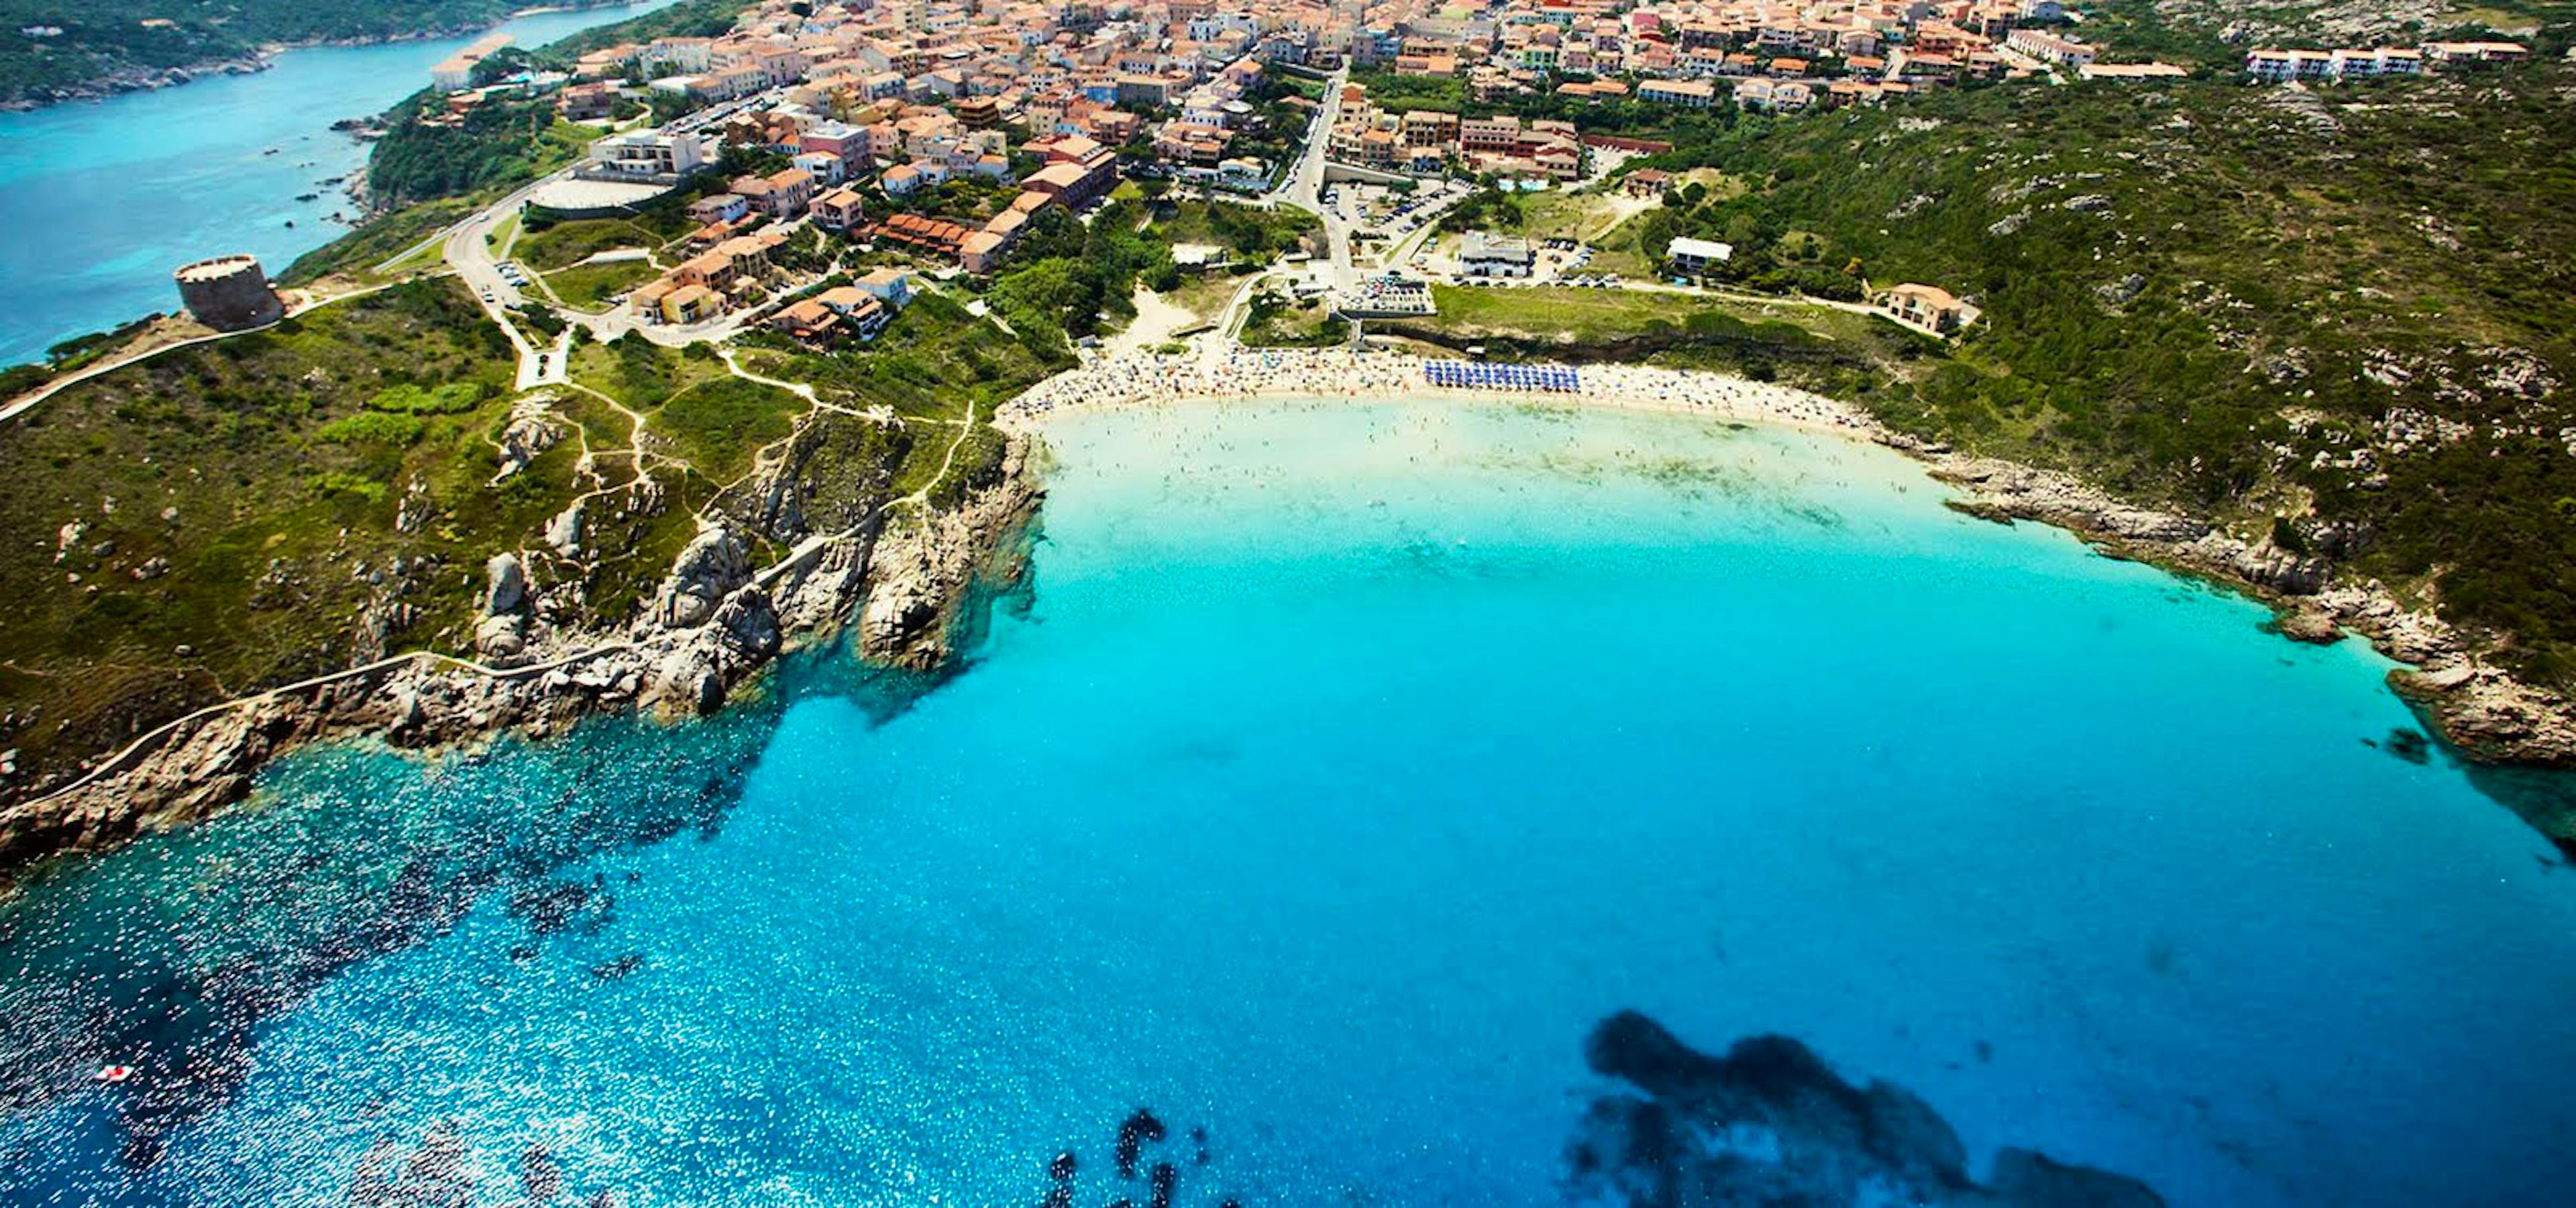 Portisco itinerary: discover Sardinia in 5 days